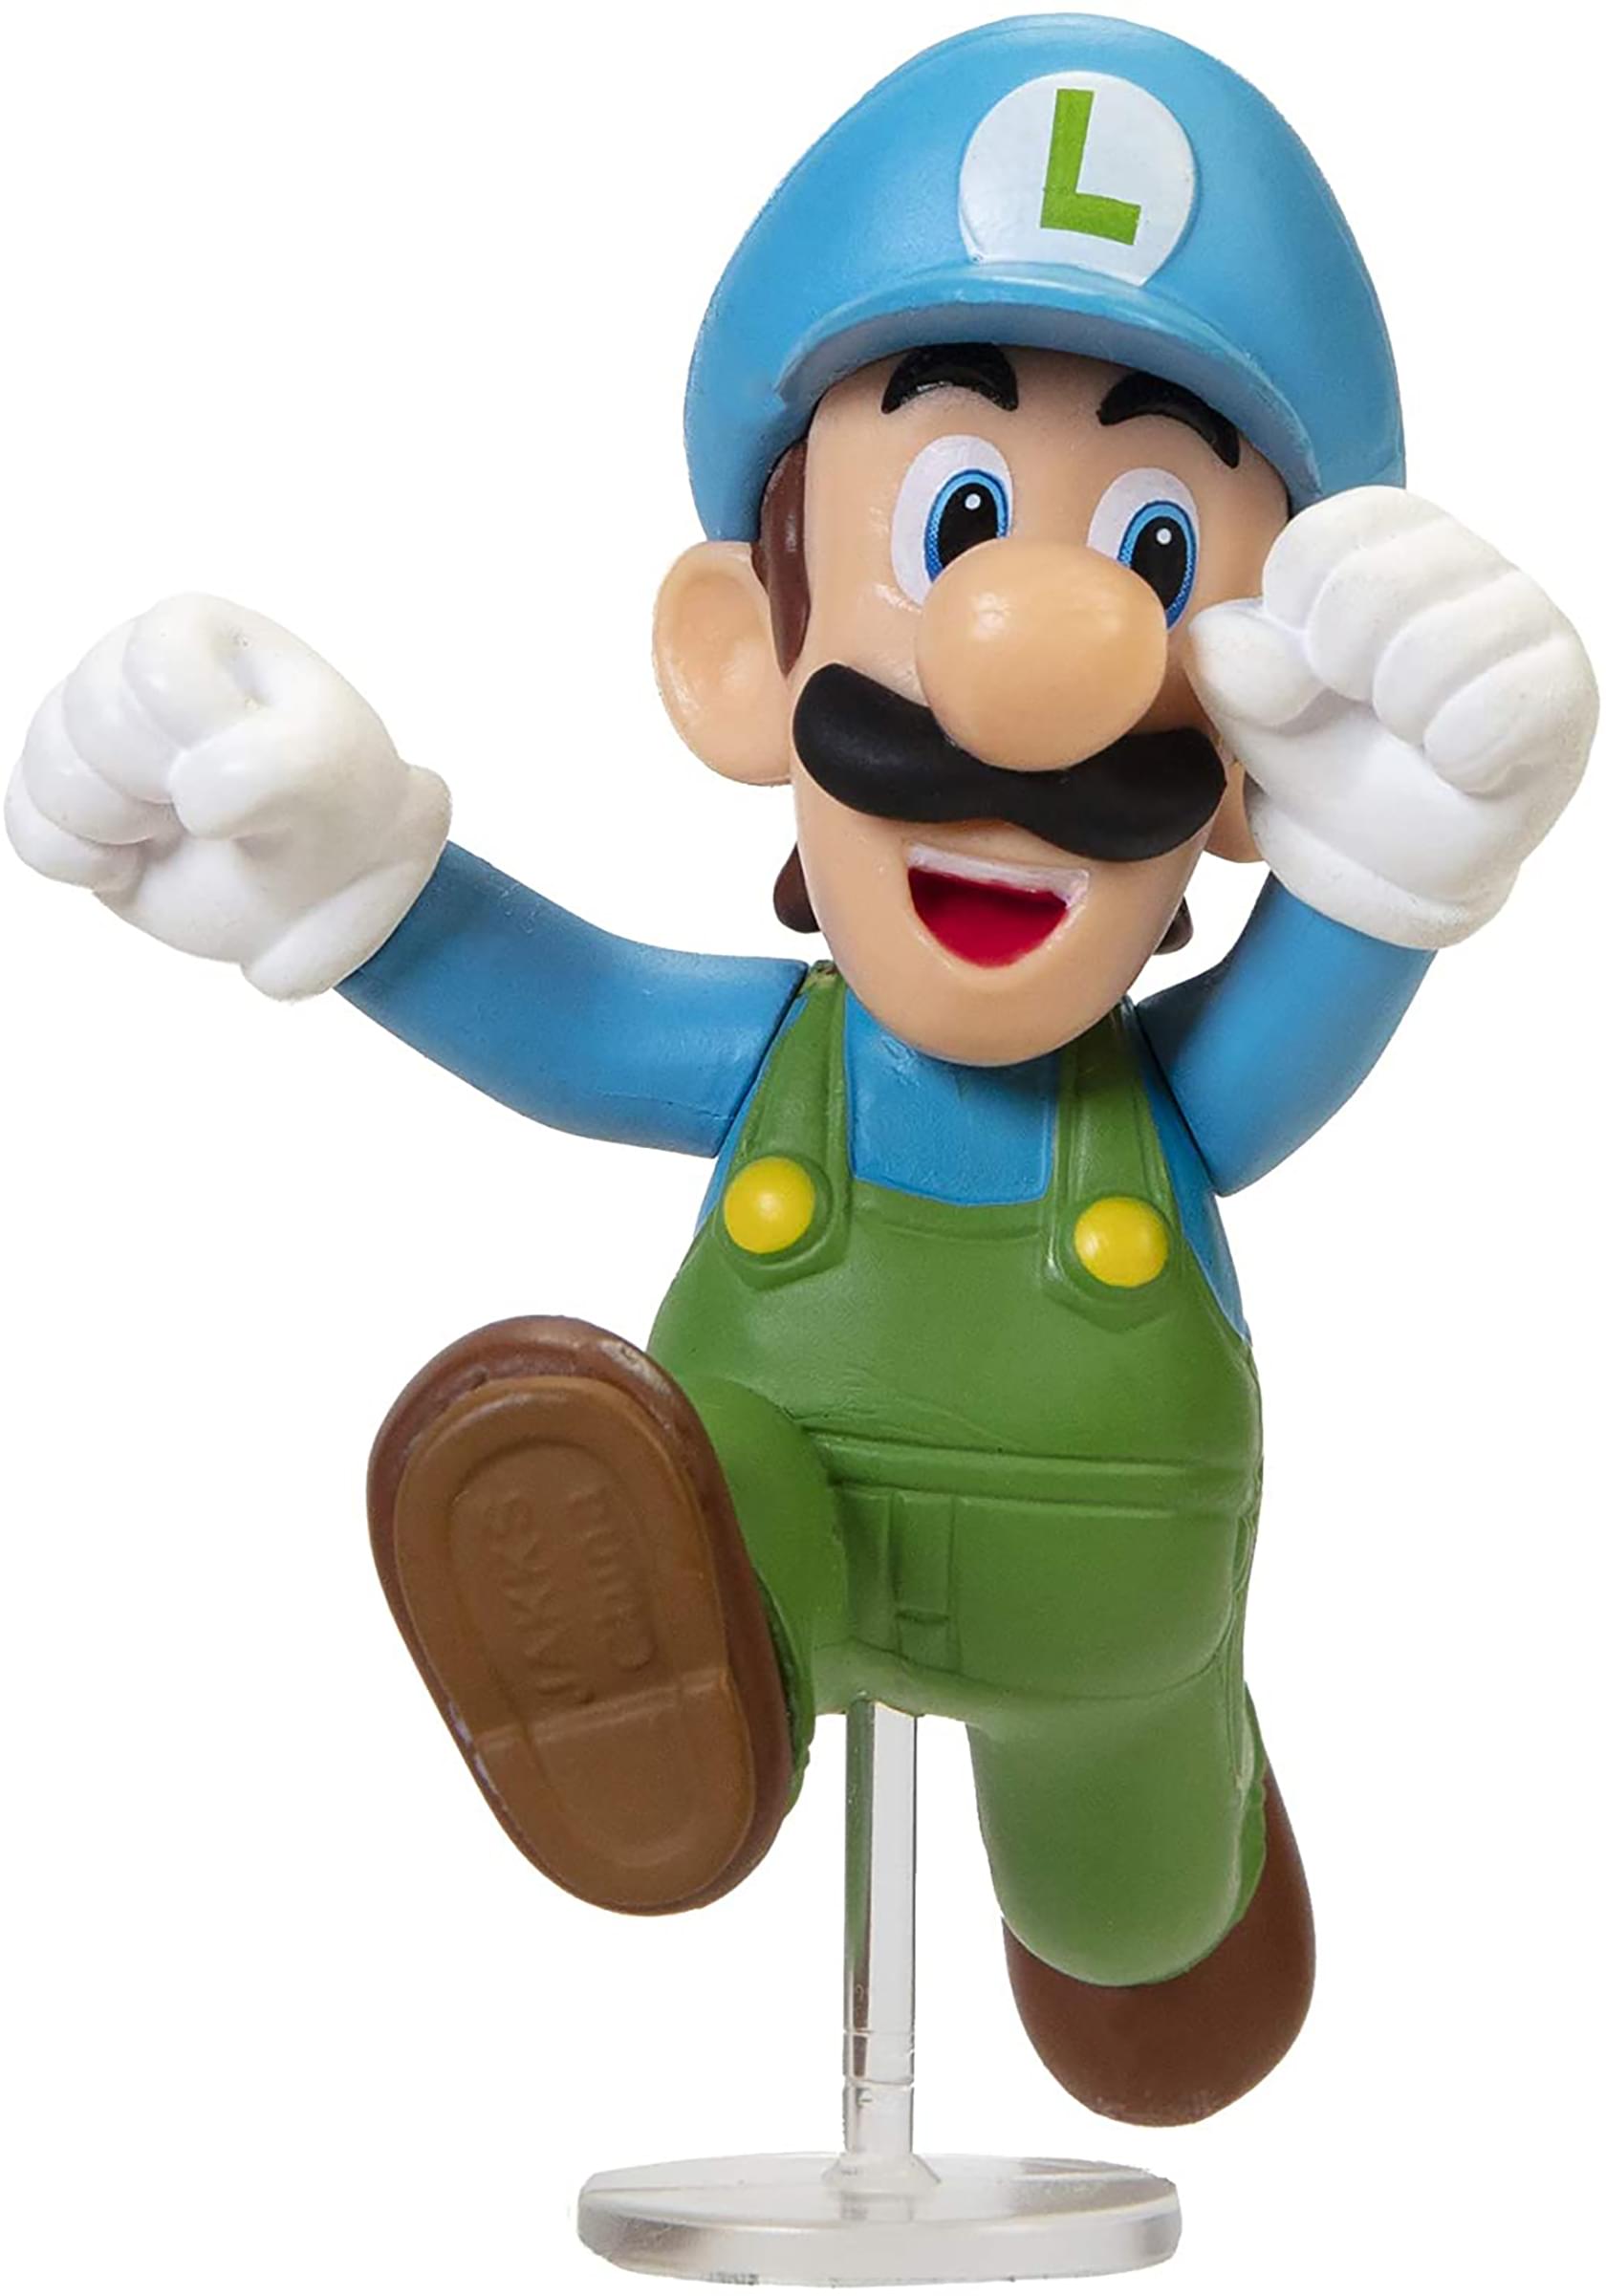 Super Mario World of Nintendo 2.5 Inch Figure | Running Ice Luigi